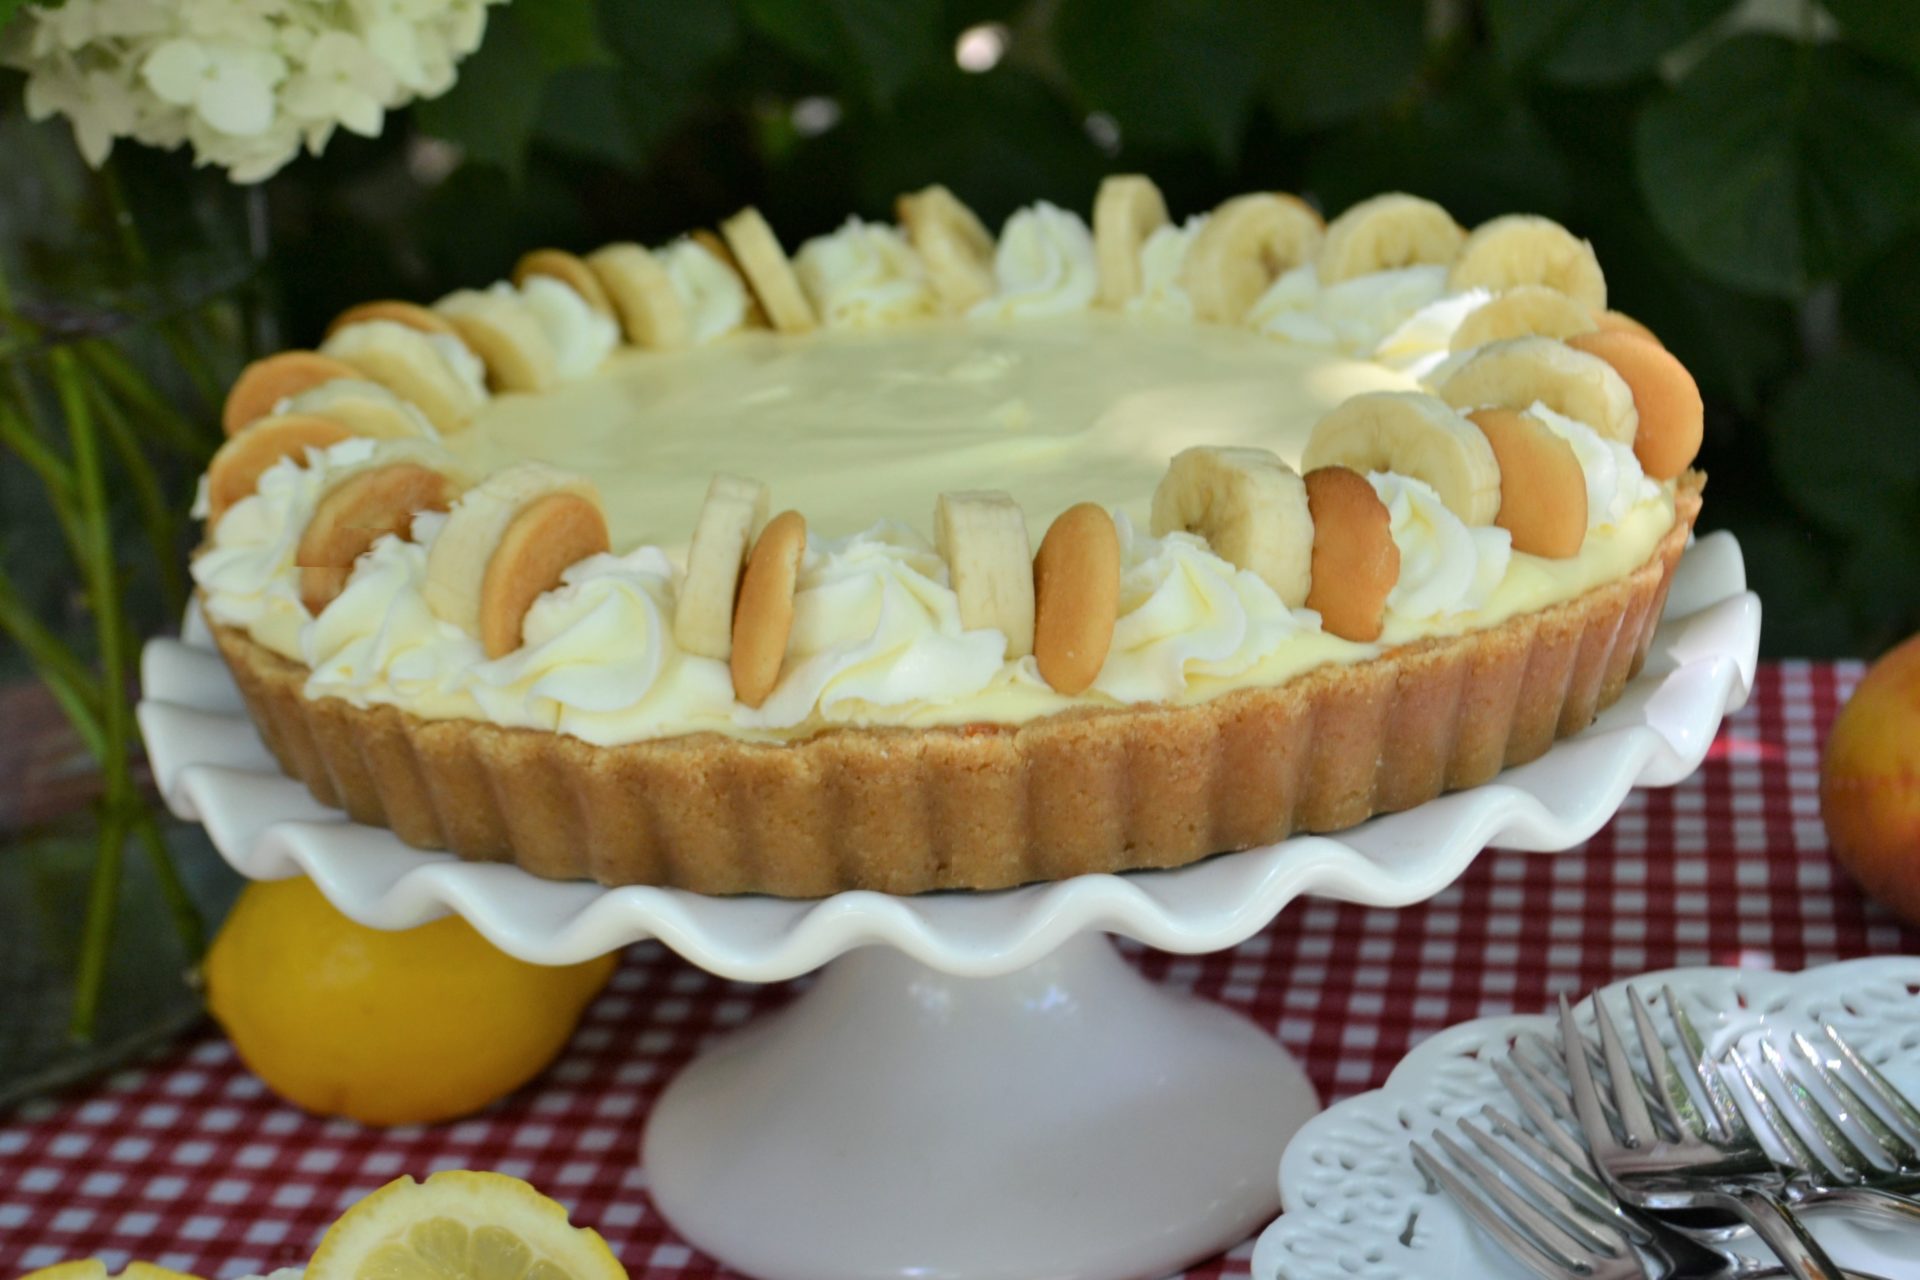 Slice of Summer Pies three cream filled easy to make pies, lemon cream, peaches & cream, Caramel banana cream pie recipe